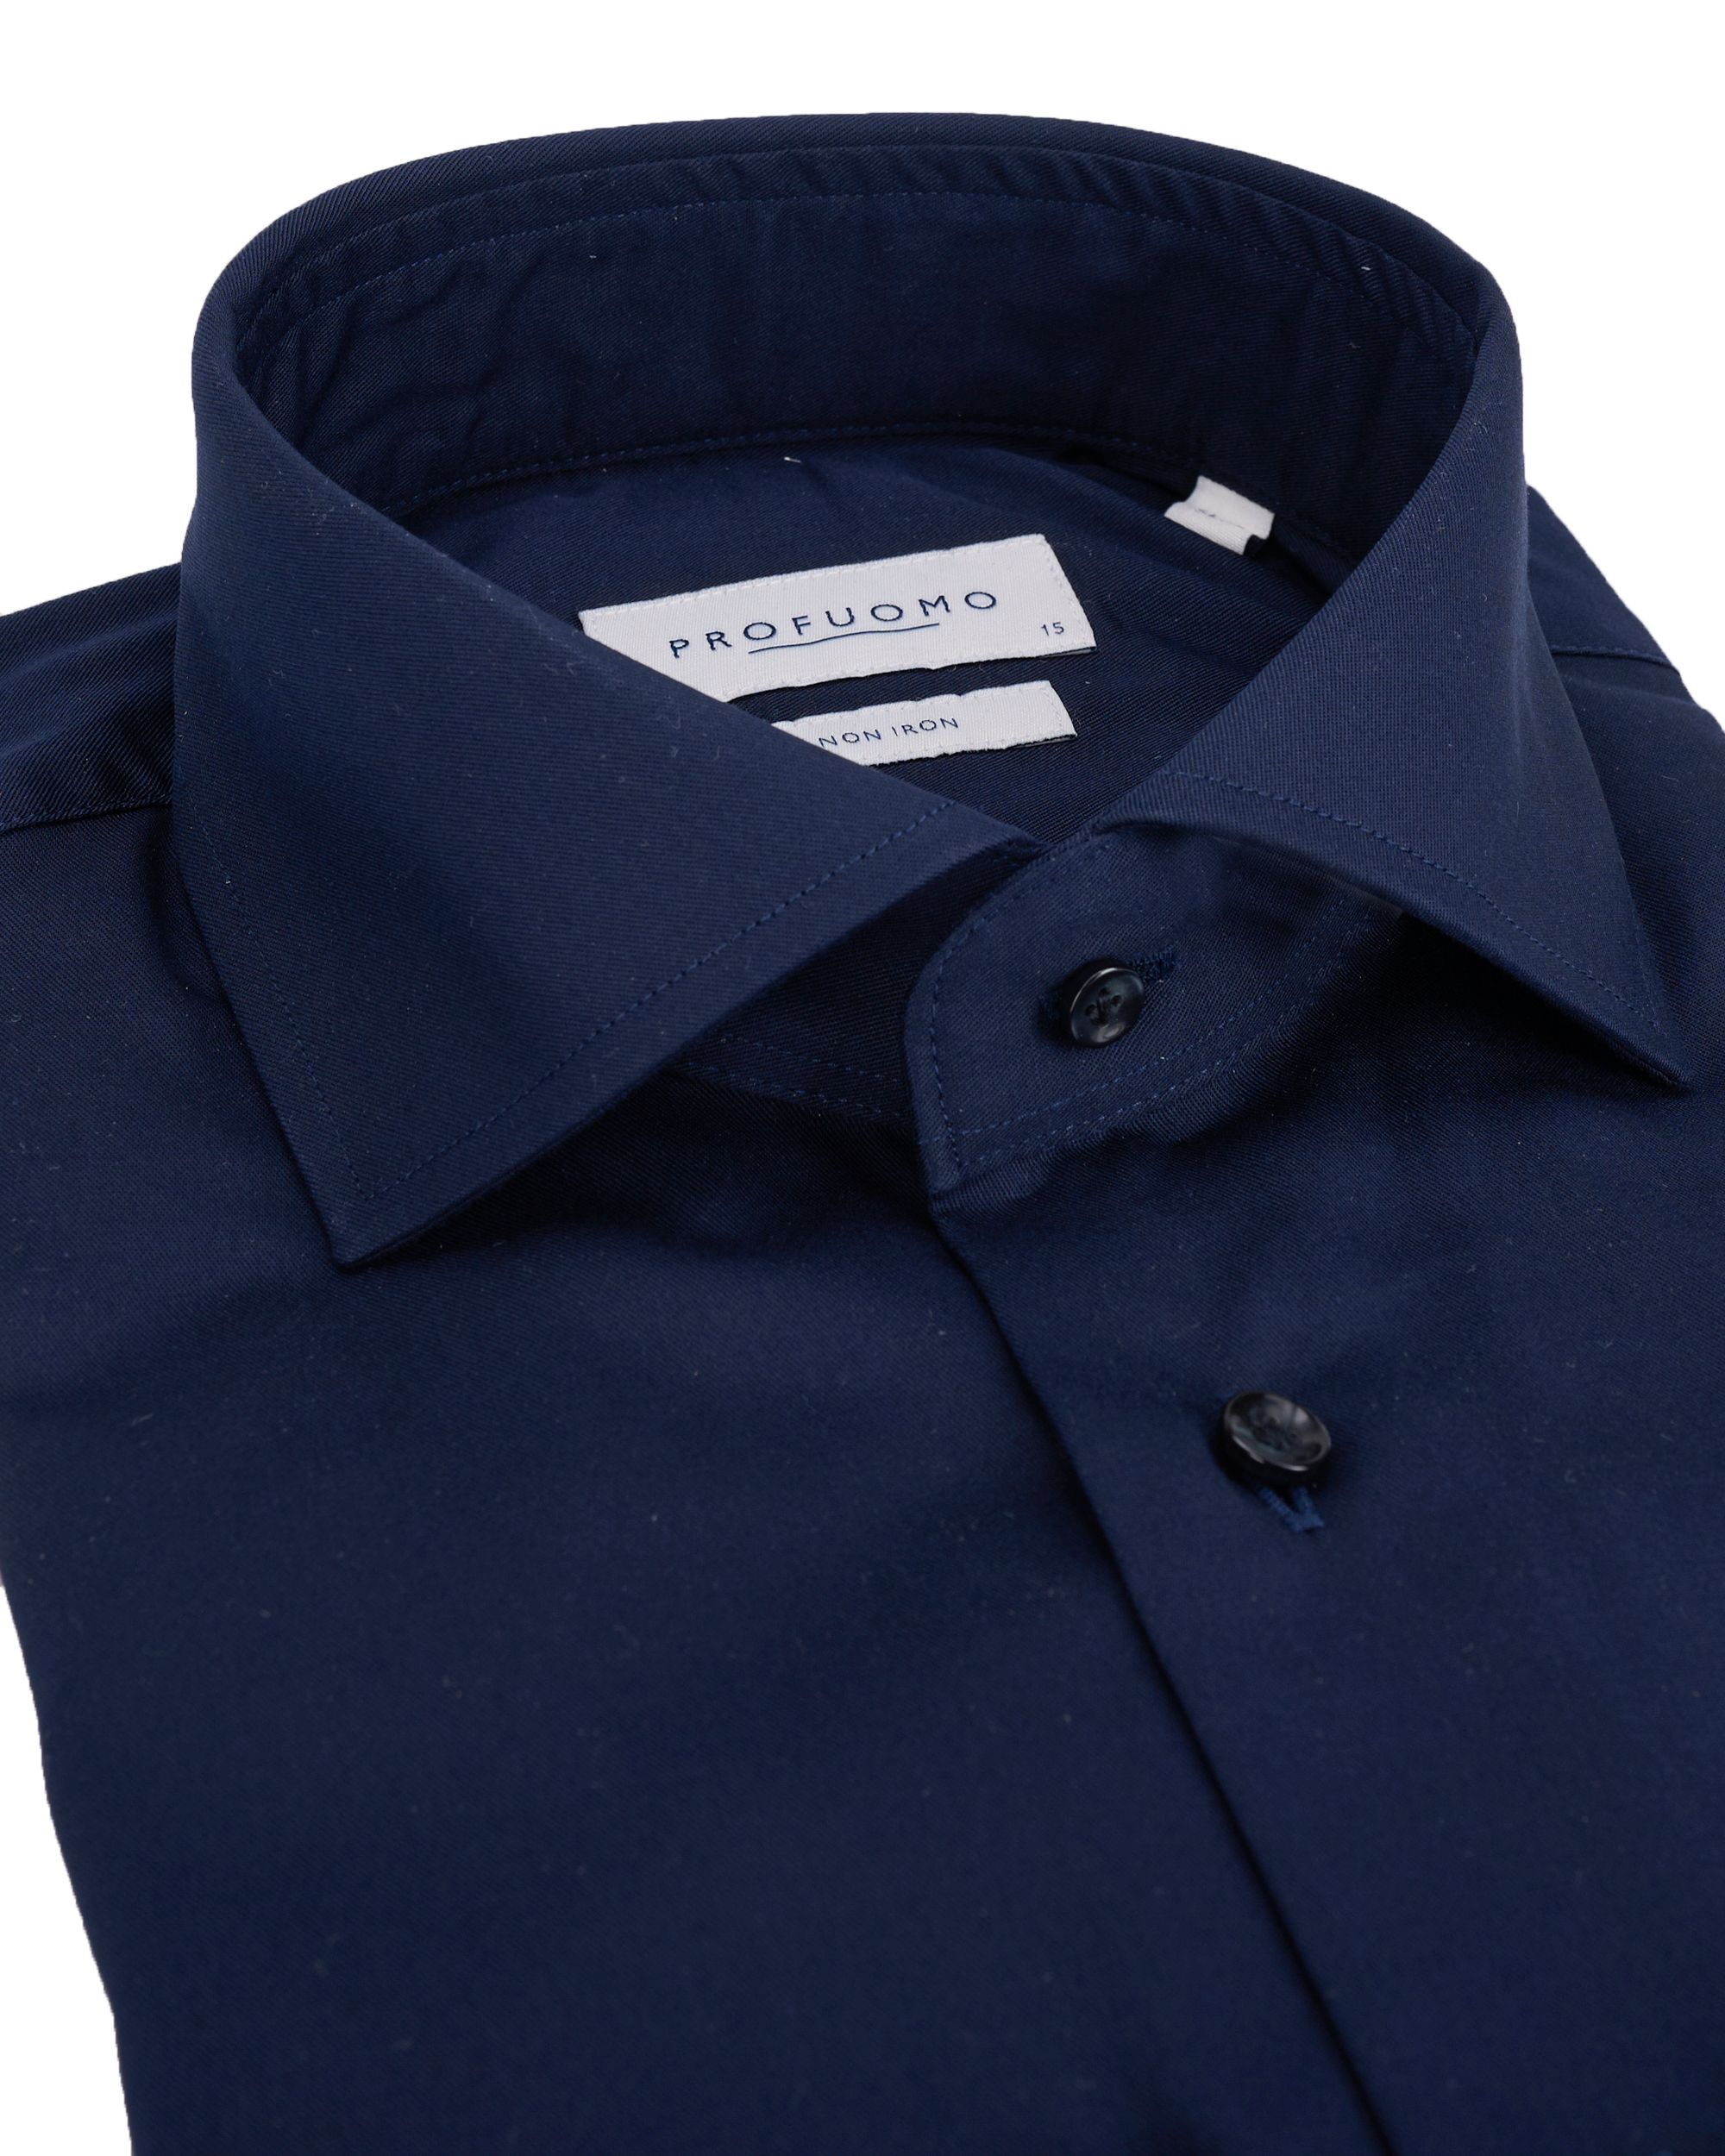 Profuomo Slim fit Overhemd Extra LM Blauw 064526-001-39